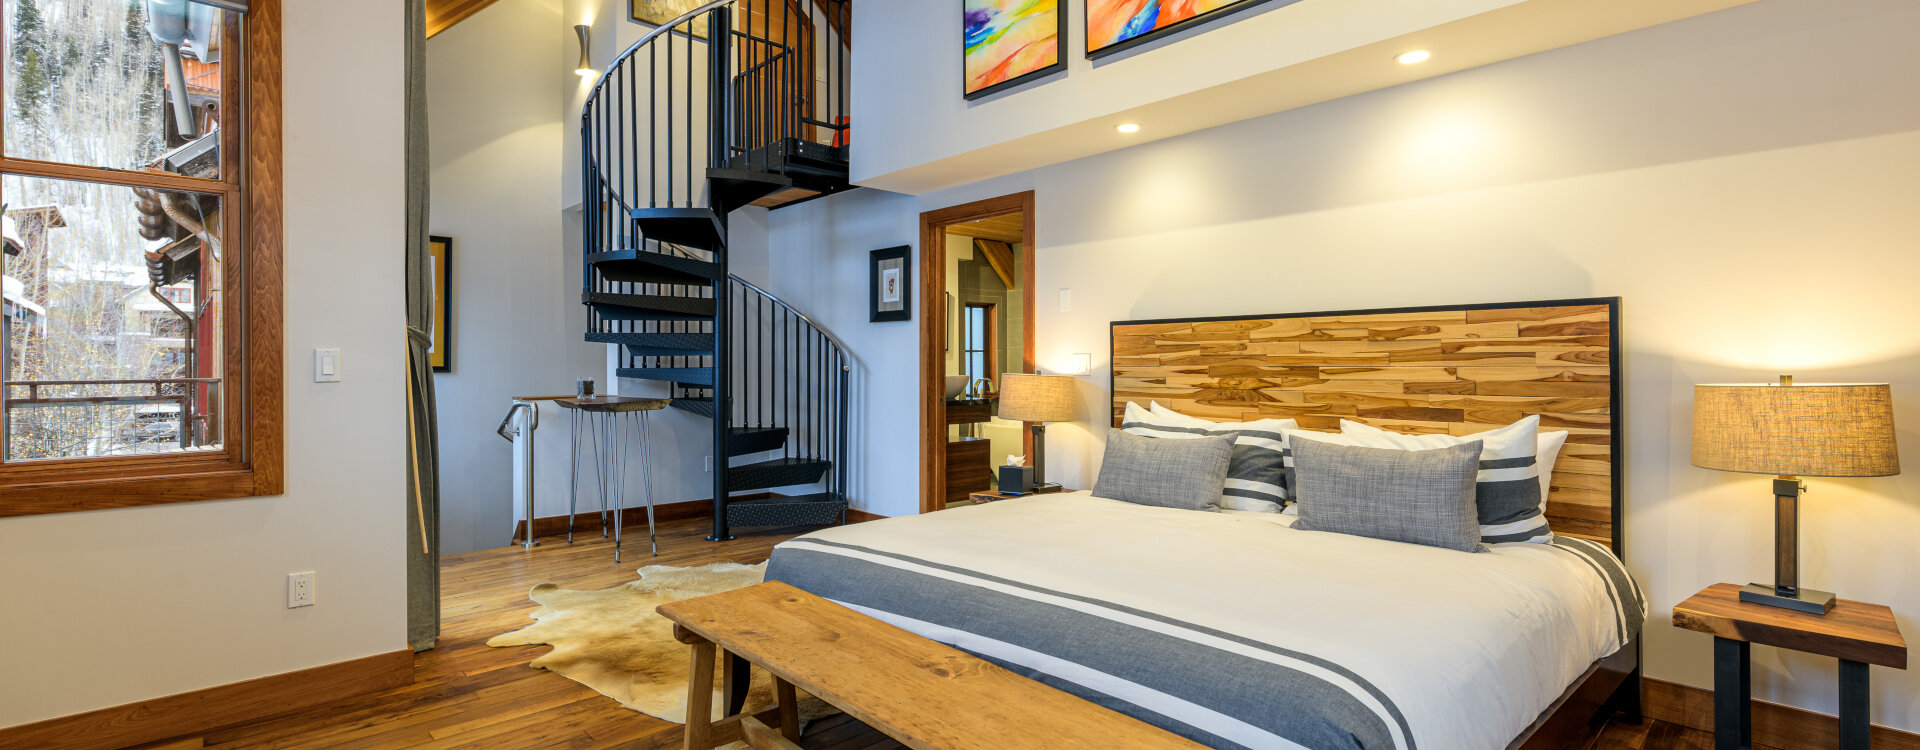 3.04-telluride-local-luxury-primary-bedroom-suite-spiral-stairs